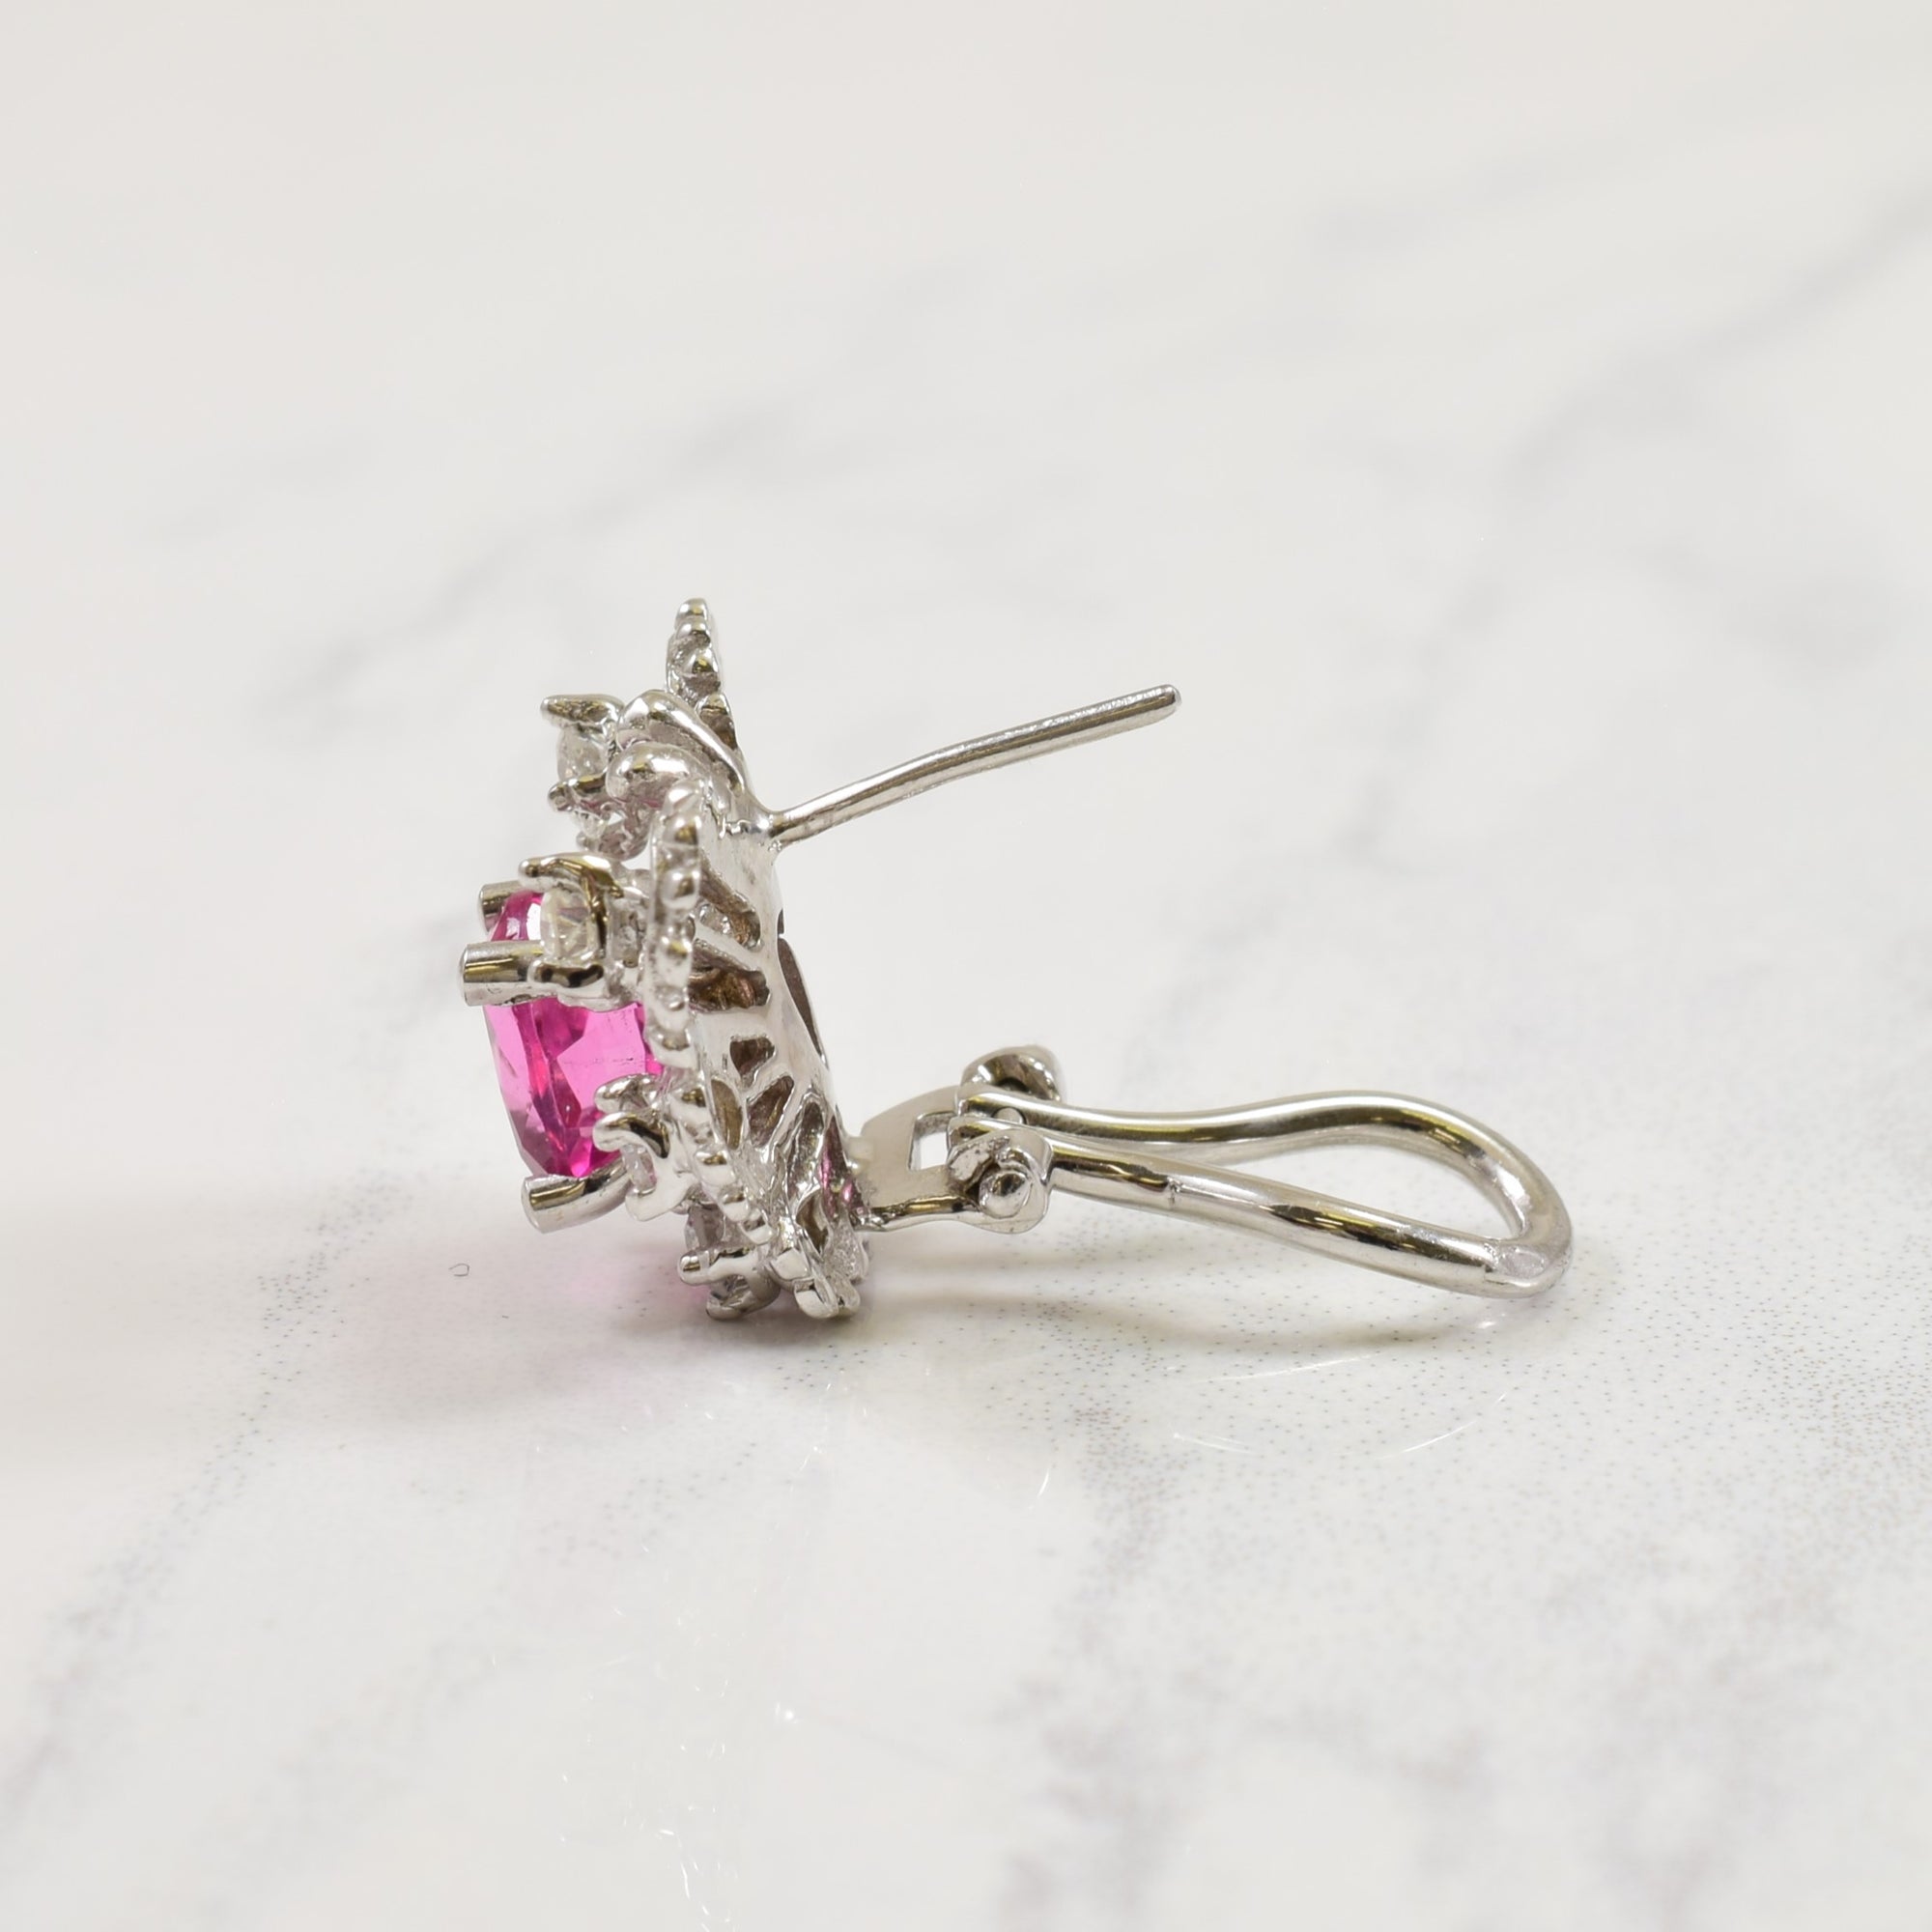 Pink Topaz & Diamond Earrings | 0.44ctw, 1.80ctw |